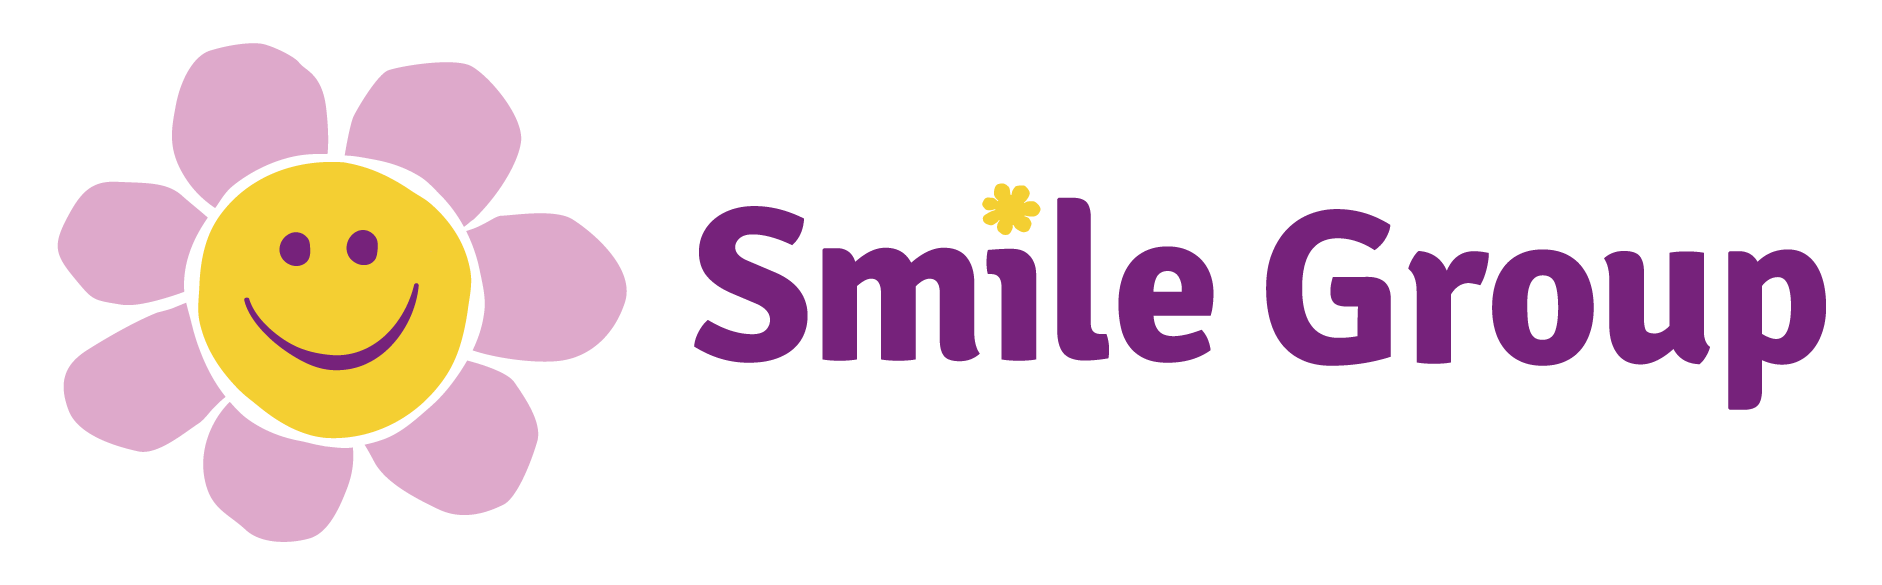 Winner Image - Smile Group